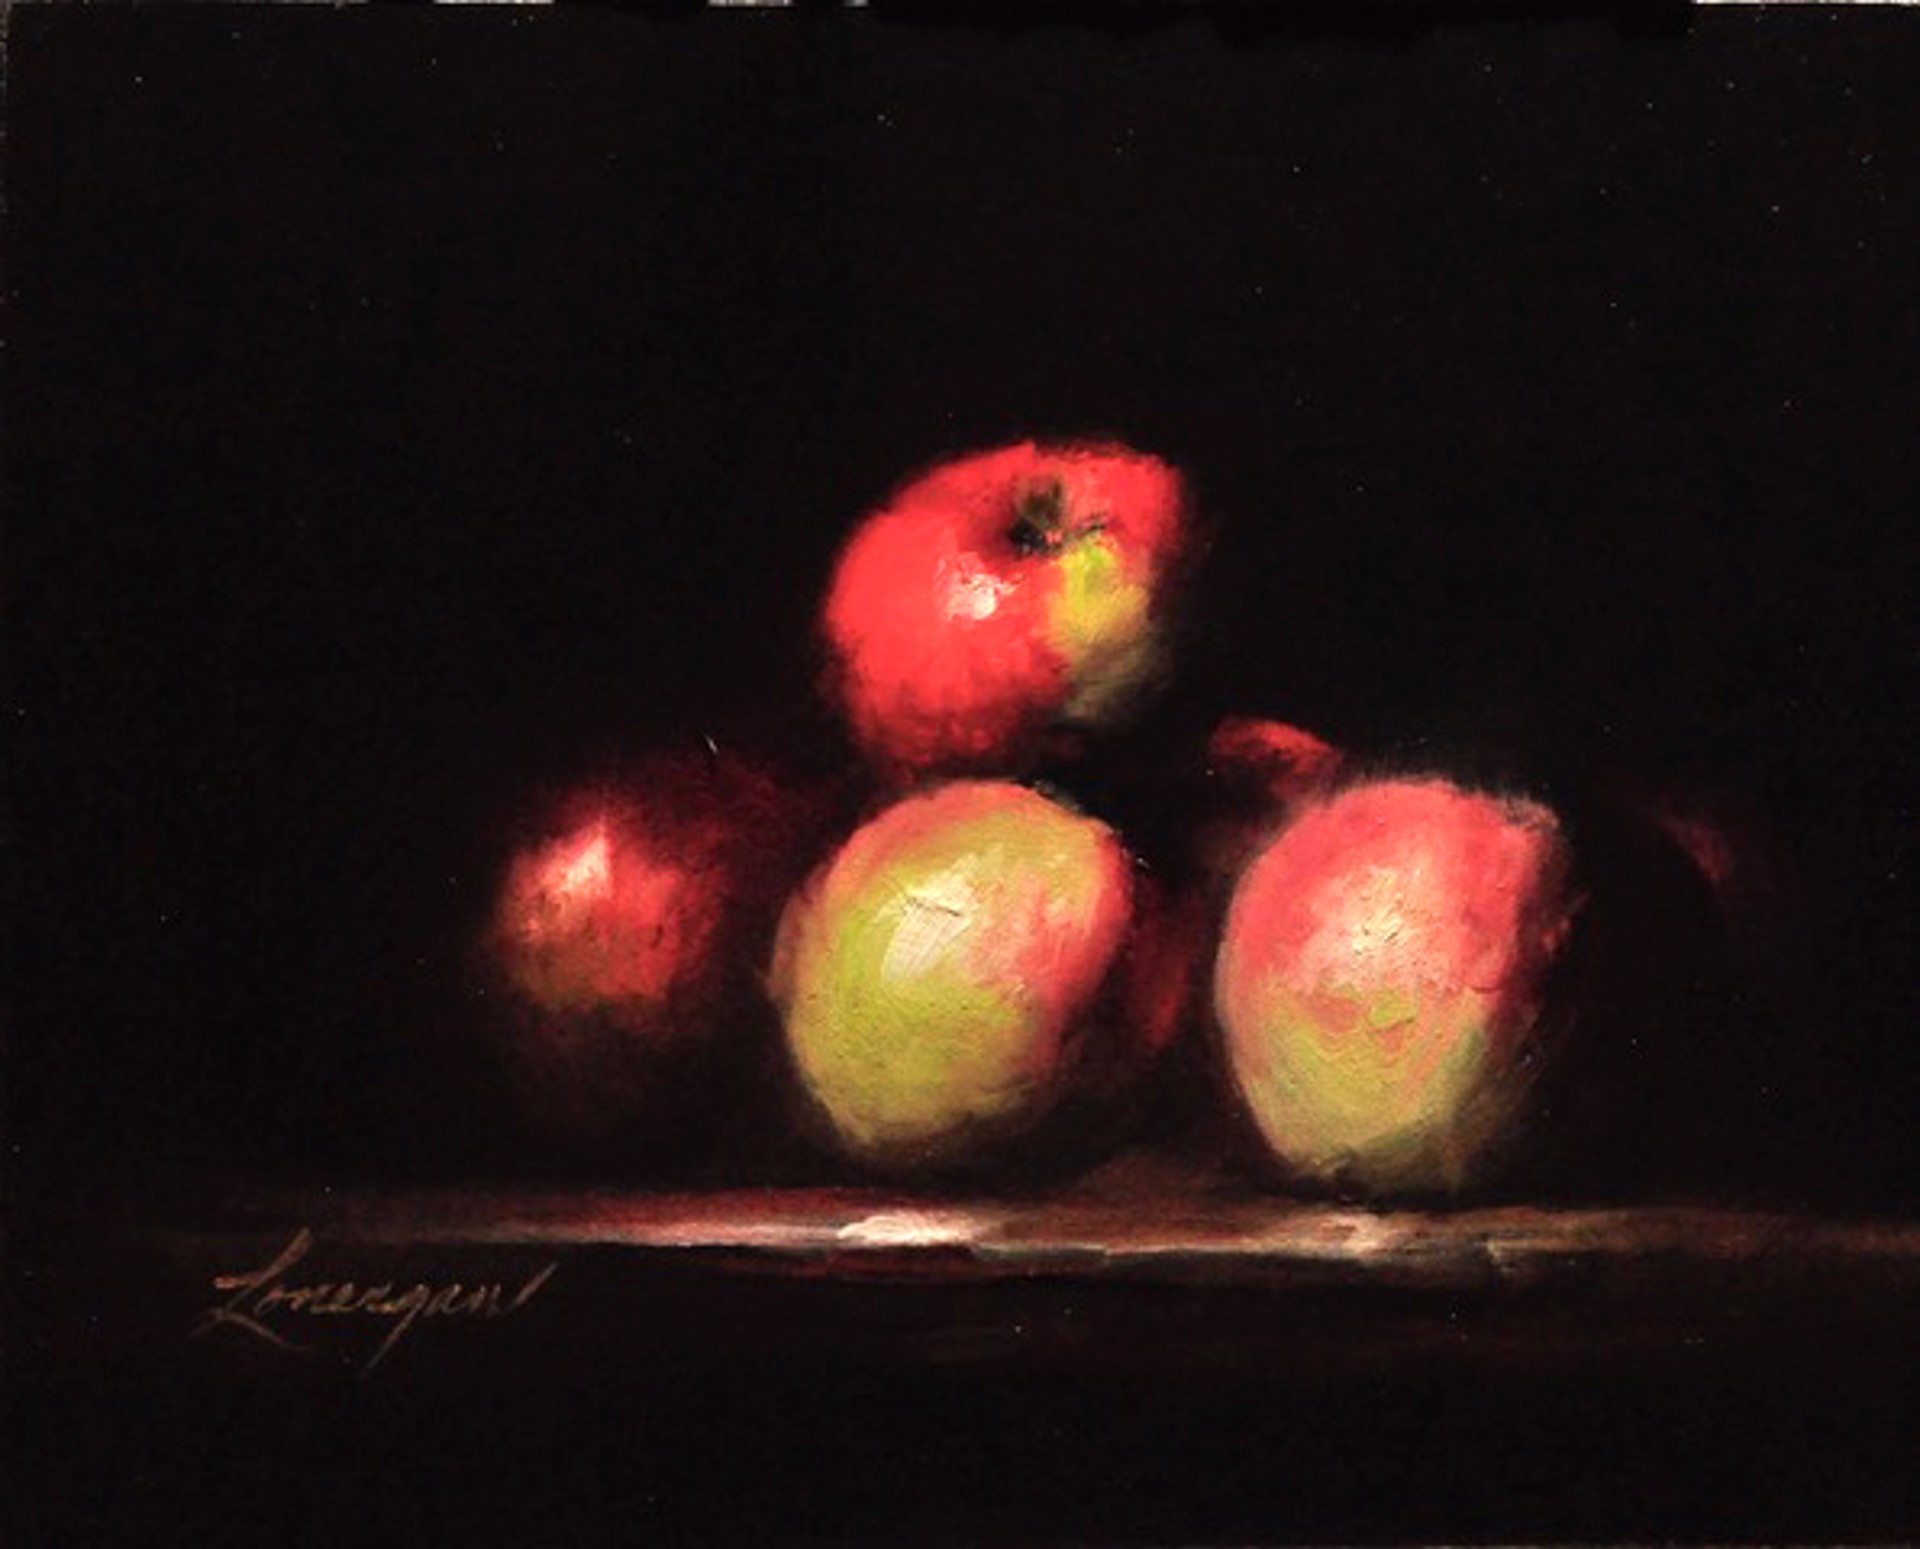 Still Life with Apples by John Lonergan